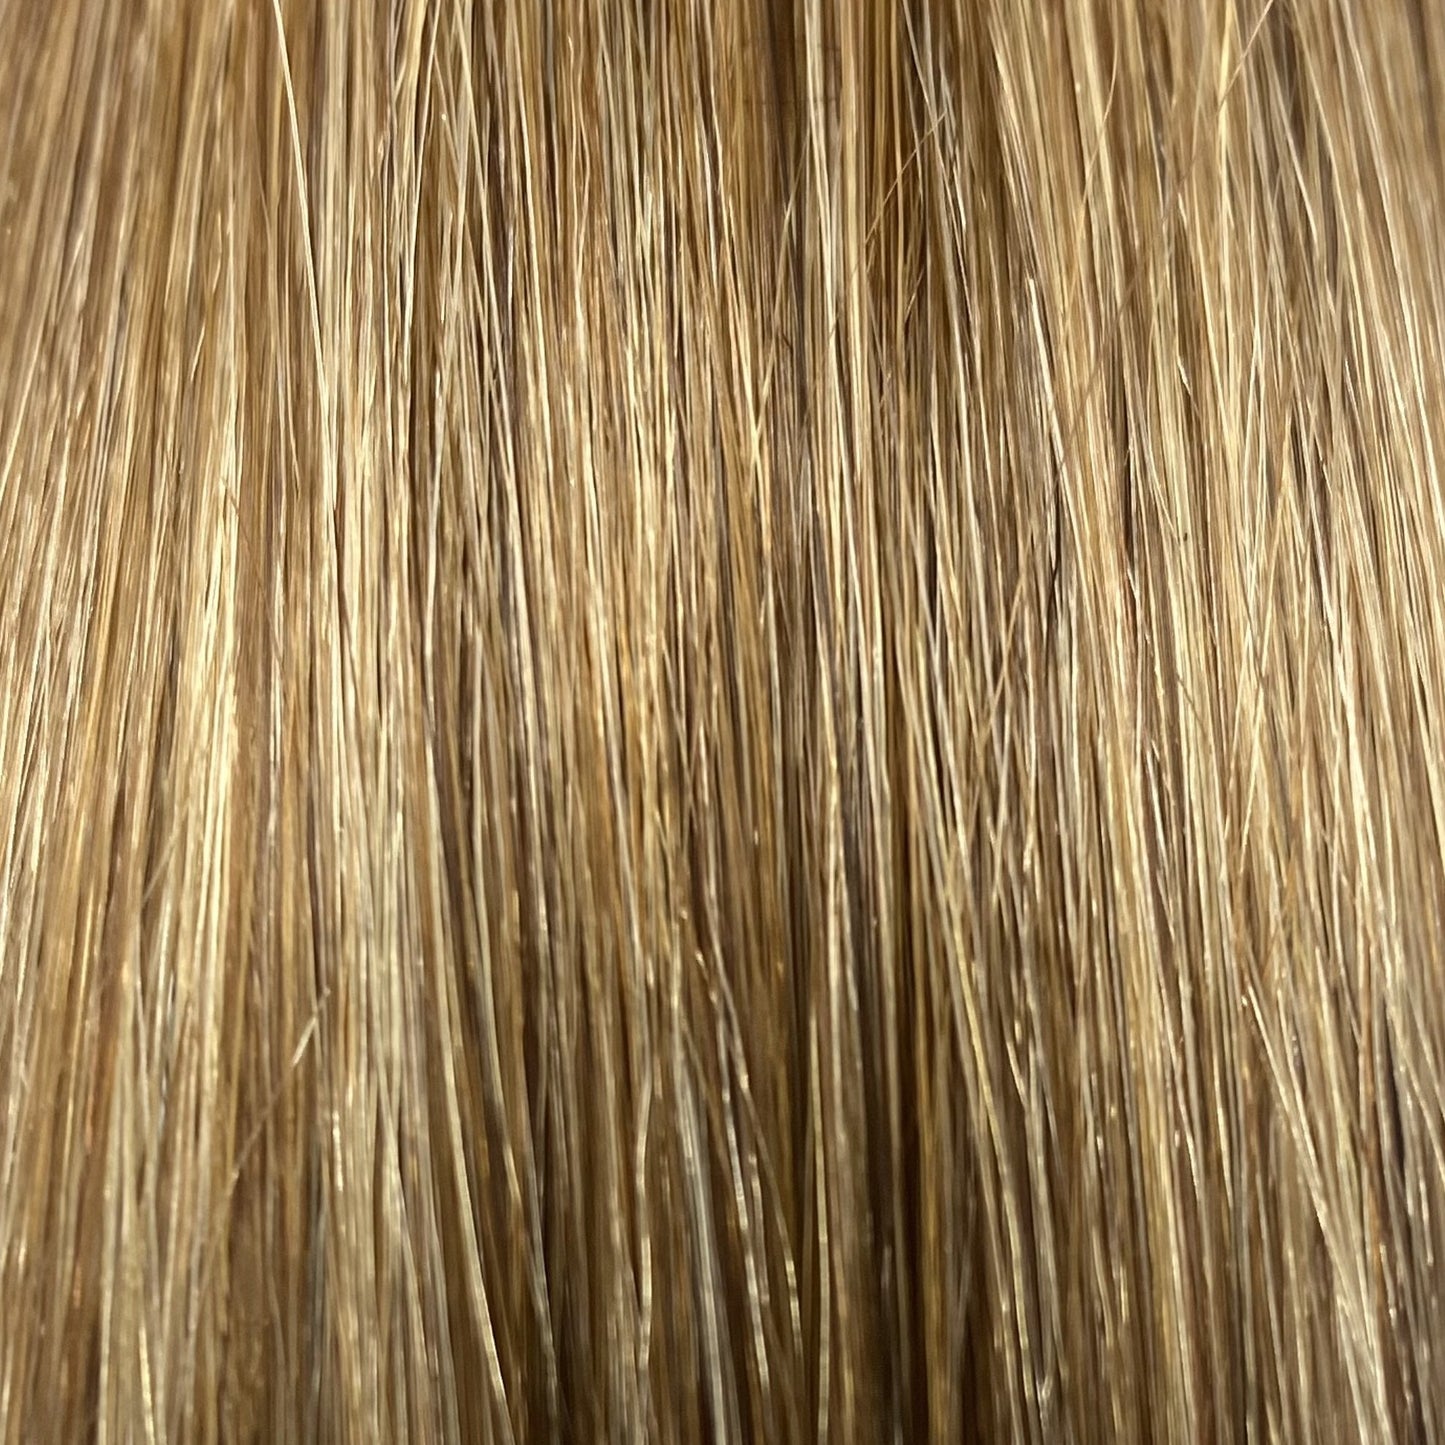 Fusion hair extensions #18/24 - 60cm/24 inches - Dark Blonde/Ash Blonde Highlight Fusion Euro So Cap 